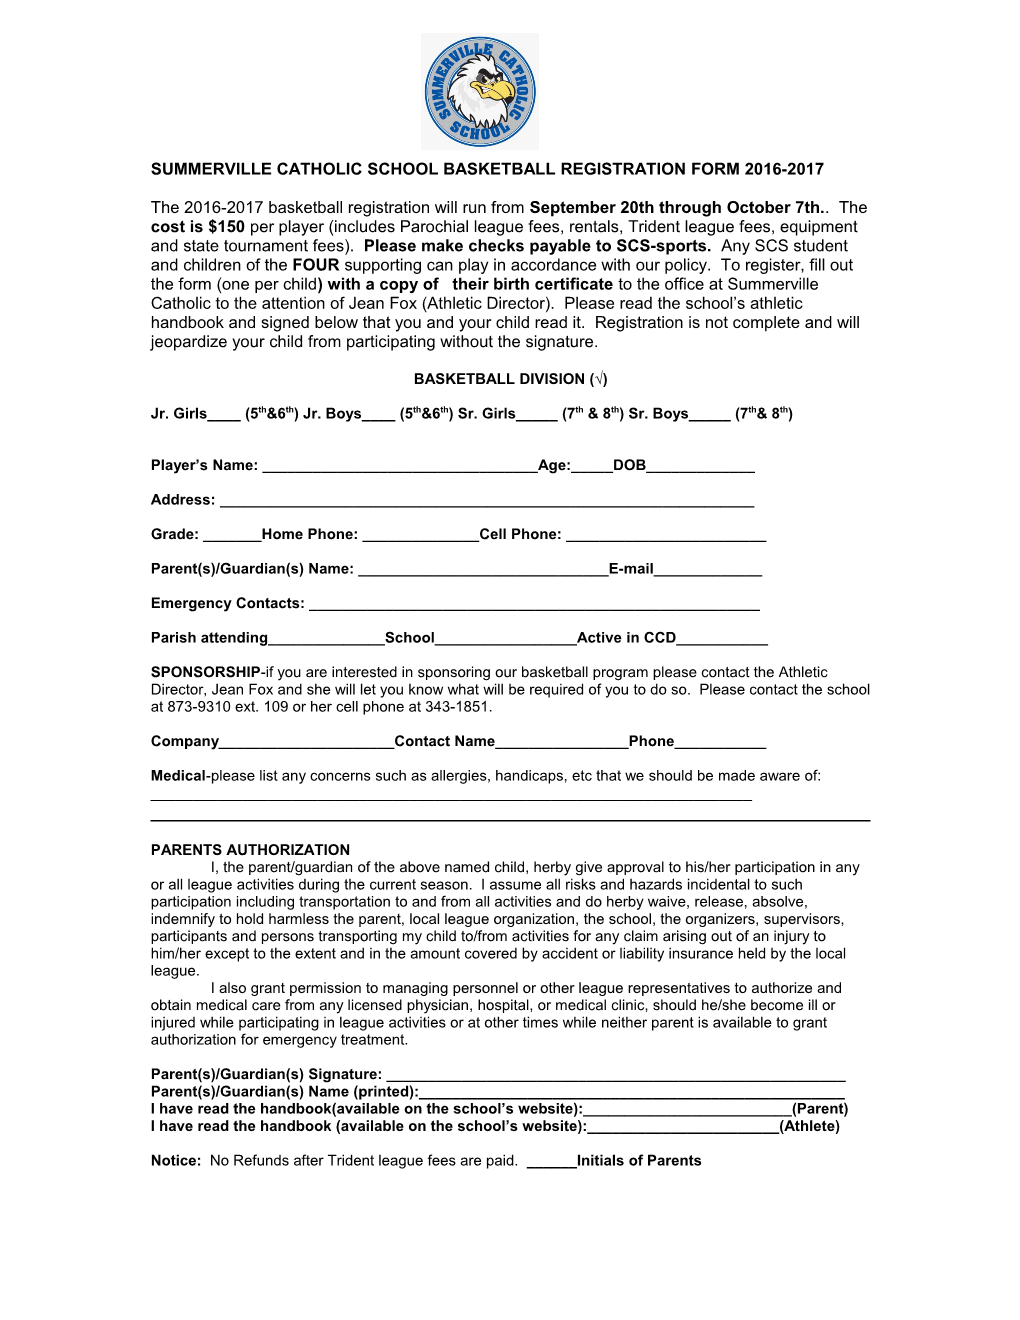 Summerville Catholic School Basketball Registration Form 2016-2017